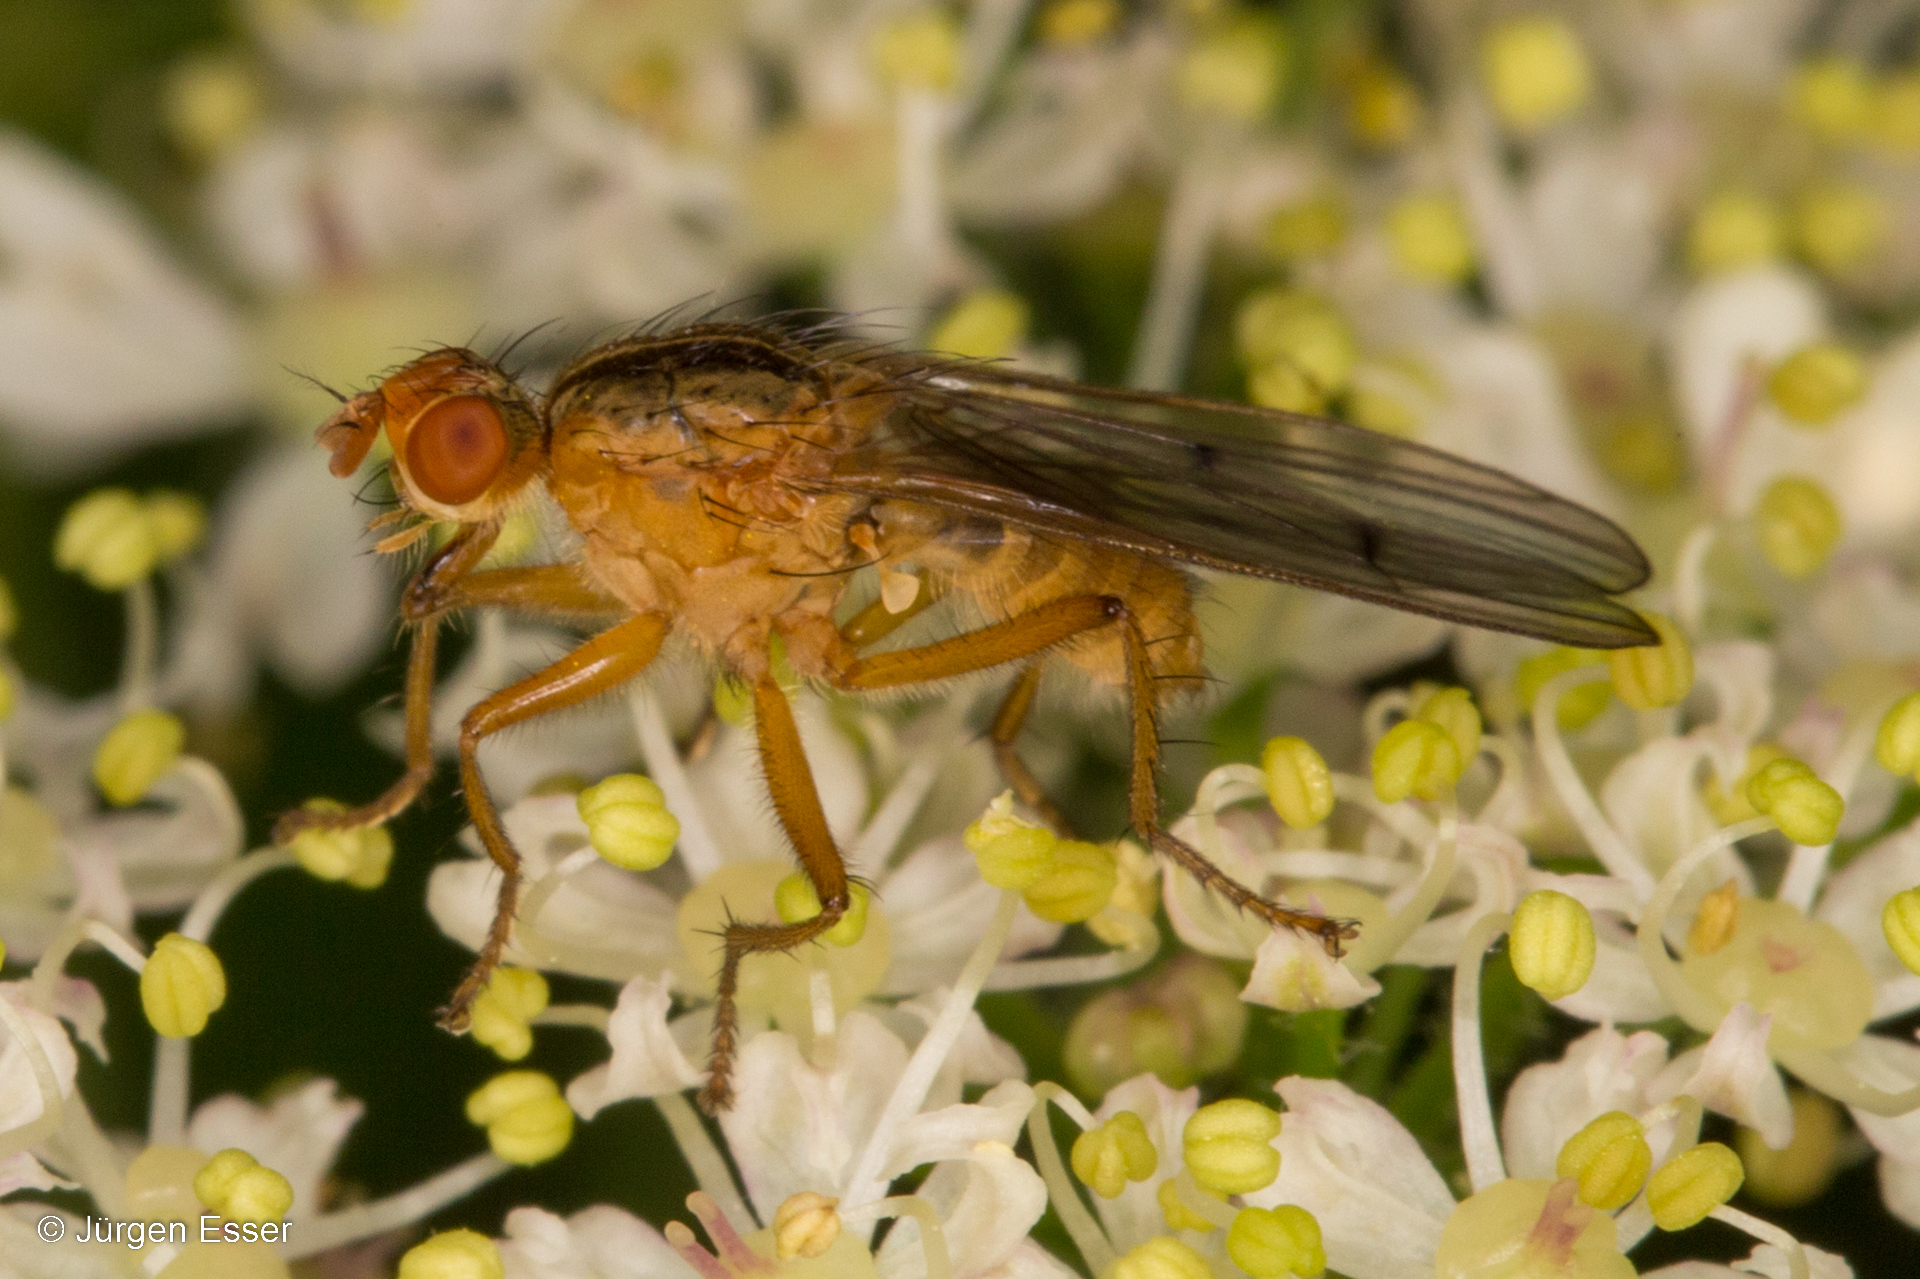 Scathophaga suilla, Familie Scathophagidae (Dungfliegen)